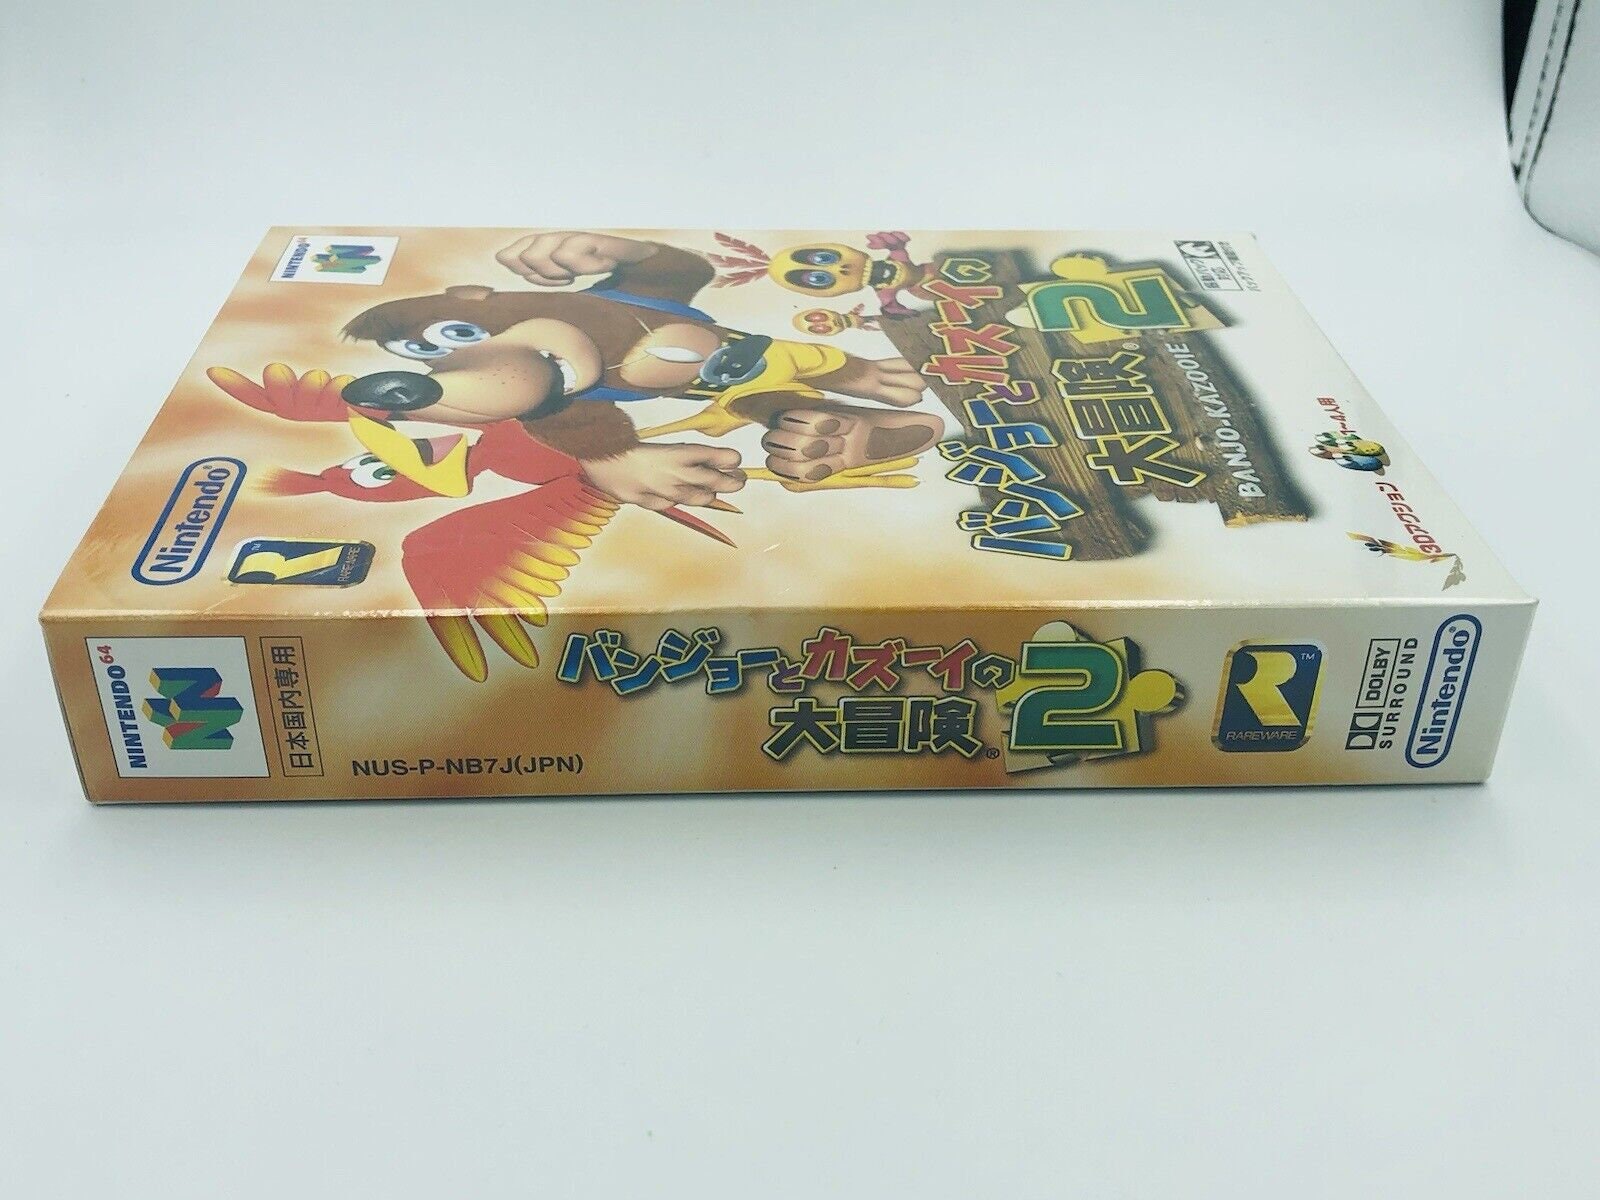 Banjo-Kazooie Nintendo 64 Japan Version